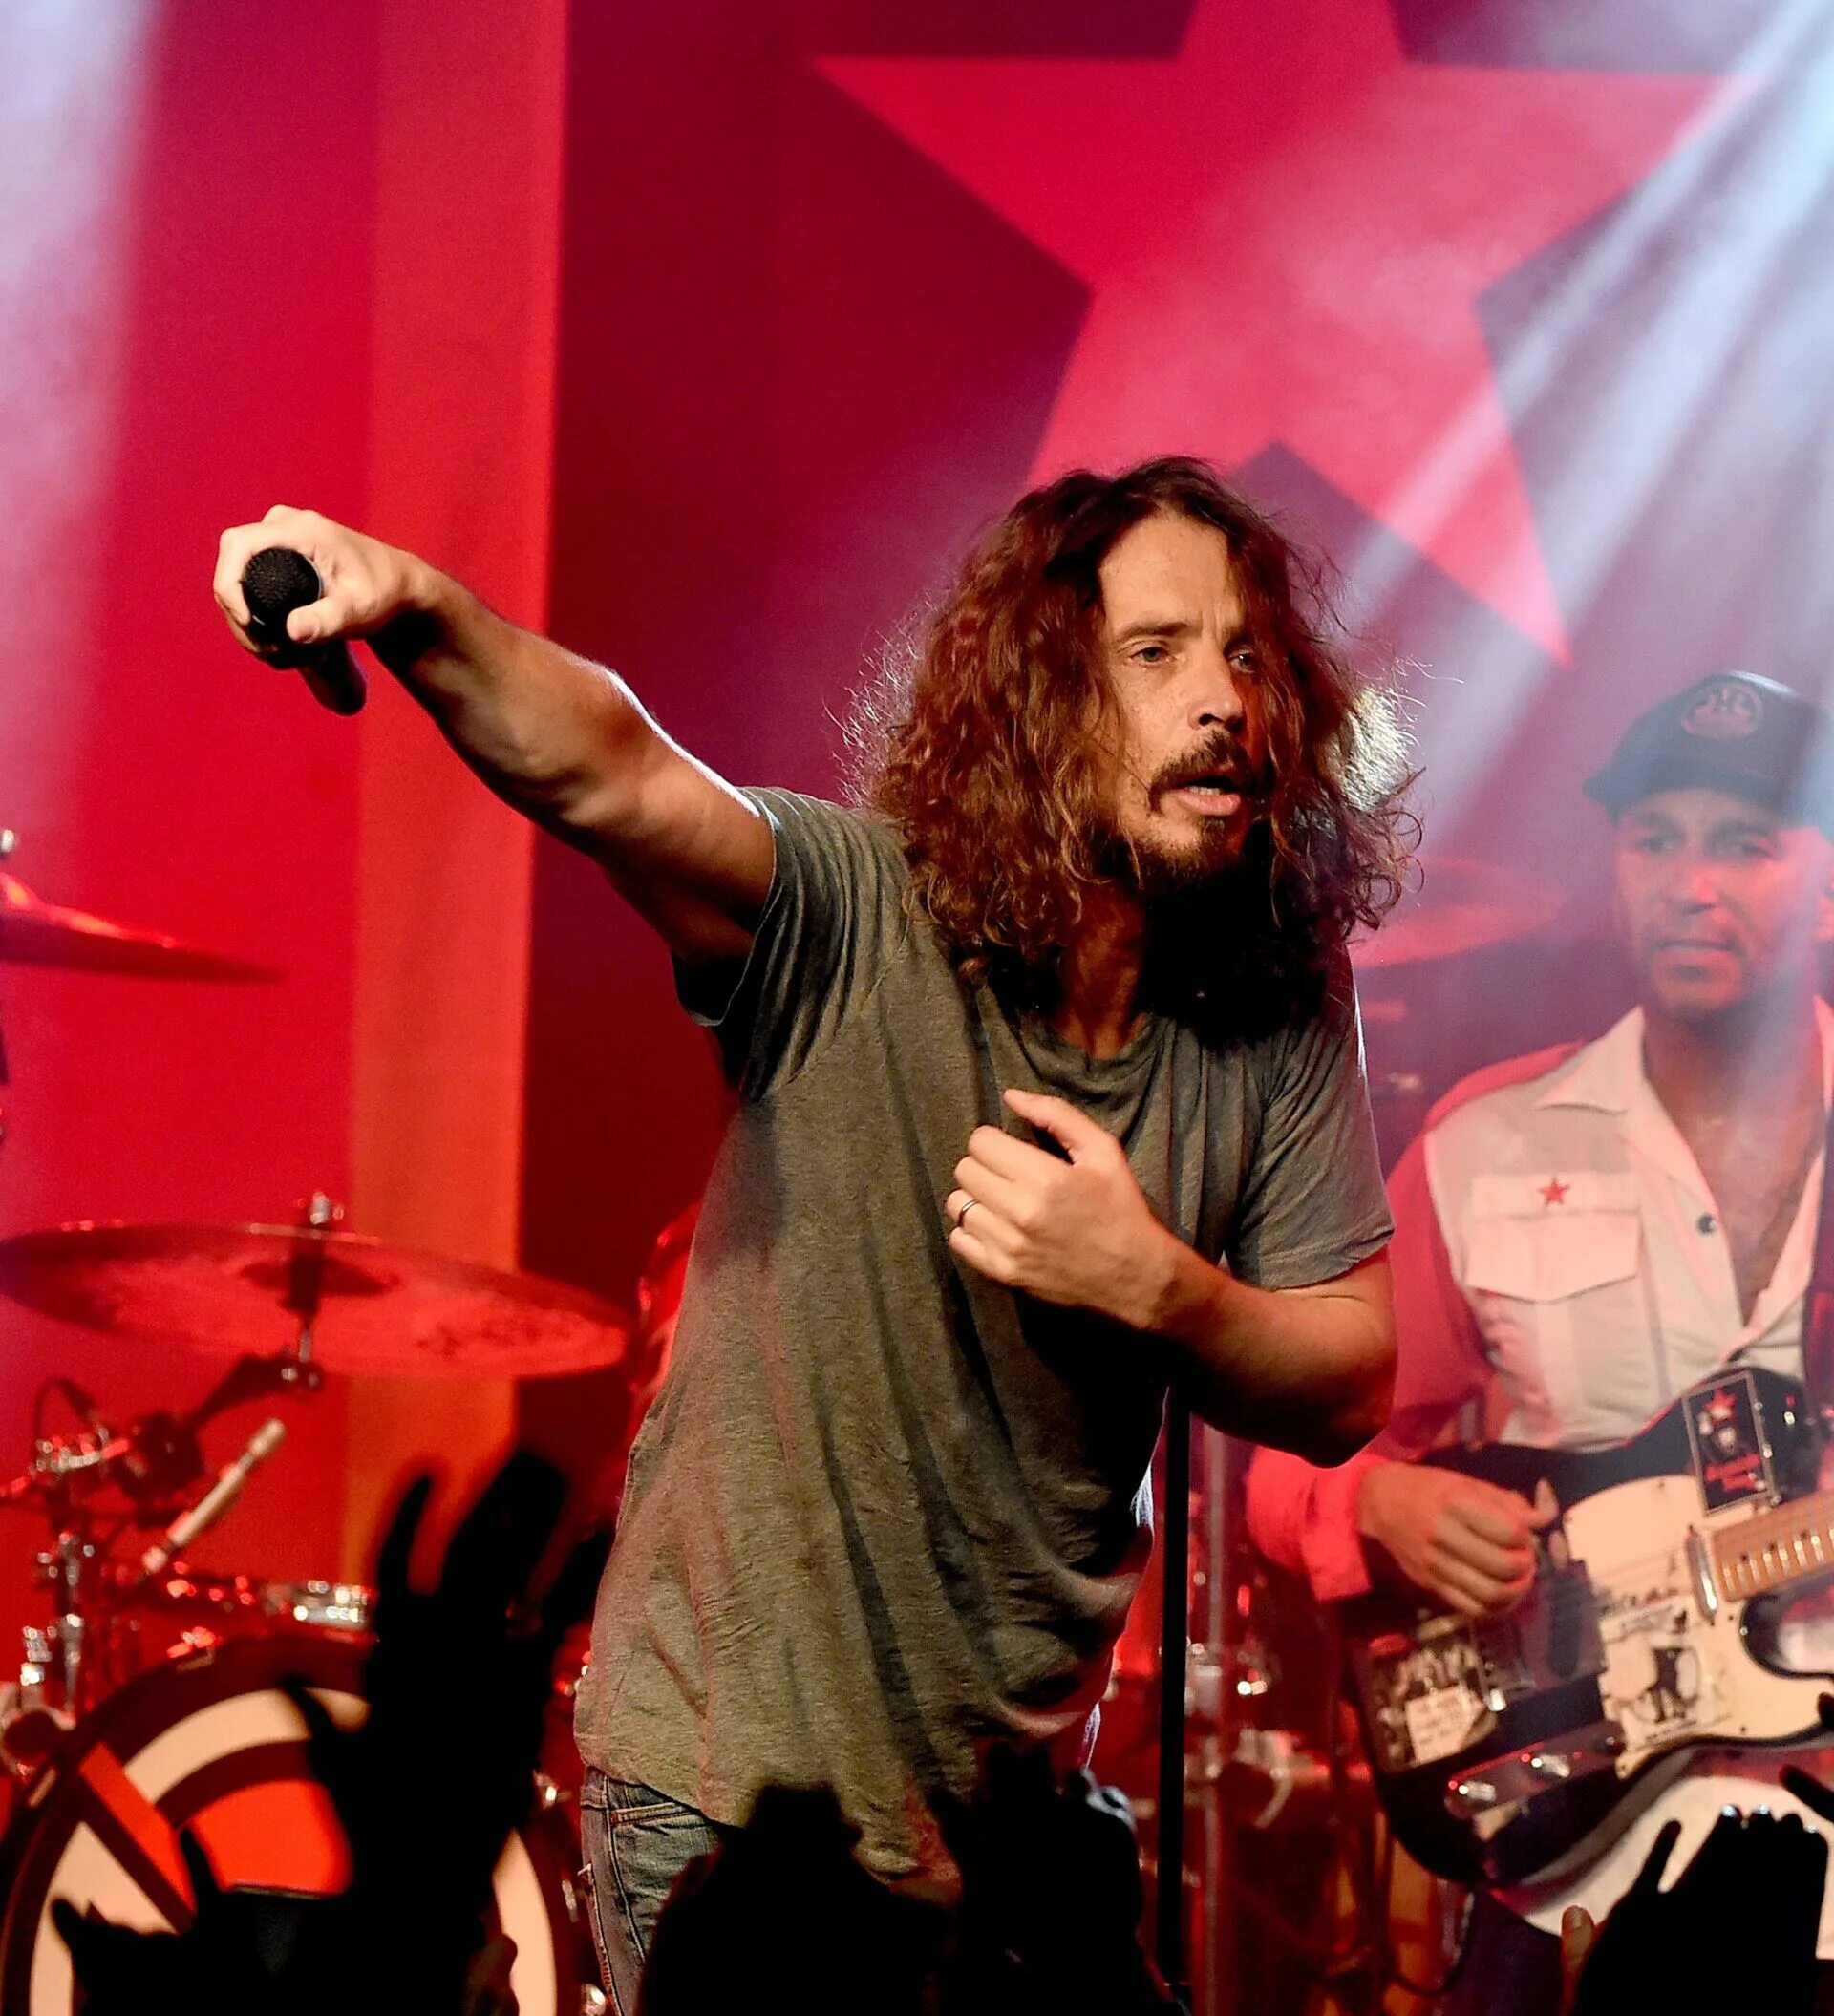 Рок умер песня. Группа Soundgarden. Крисс Корнелл на сцене. Balance presents:the Soundgarden. "Soundgarden" && ( исполнитель | группа | музыка | Music | Band | artist ) && (фото | photo).